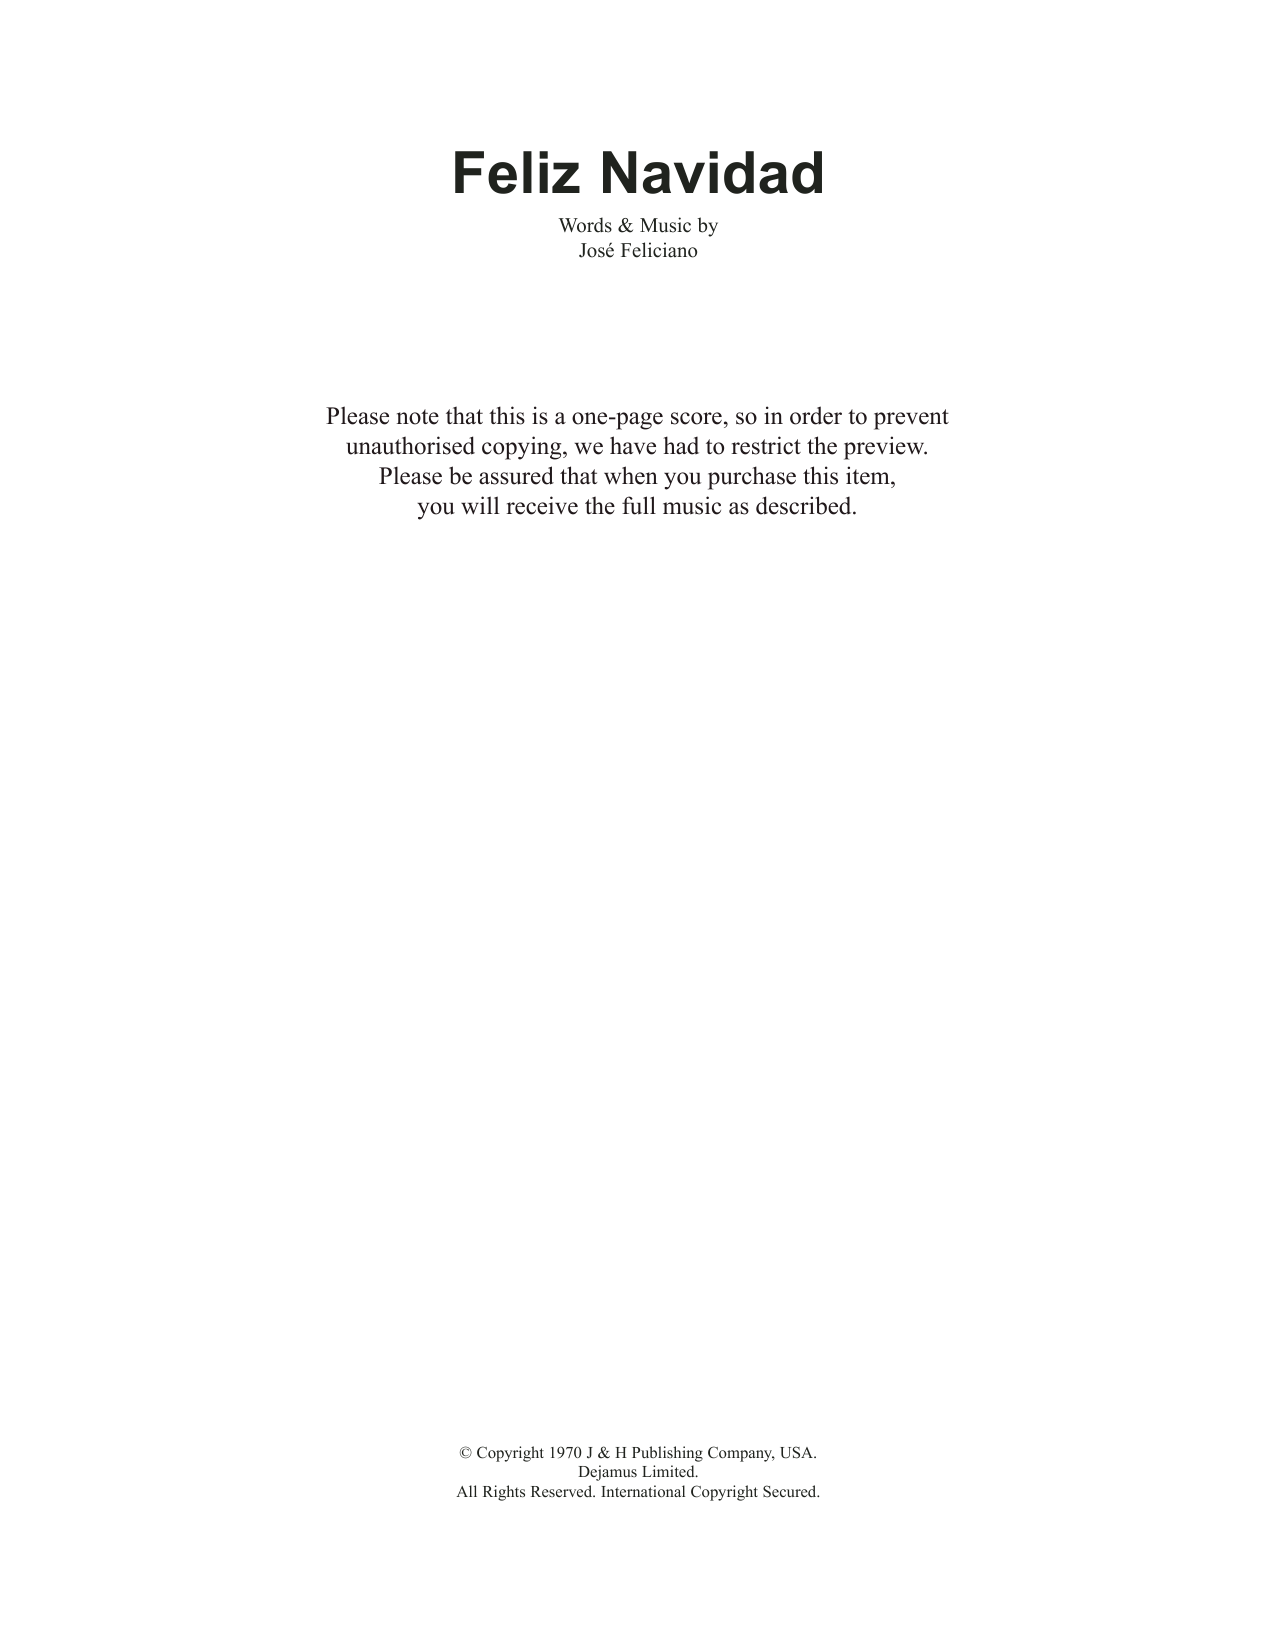 Jose Feliciano Feliz Navidad Sheet Music Notes & Chords for Ocarina - Download or Print PDF